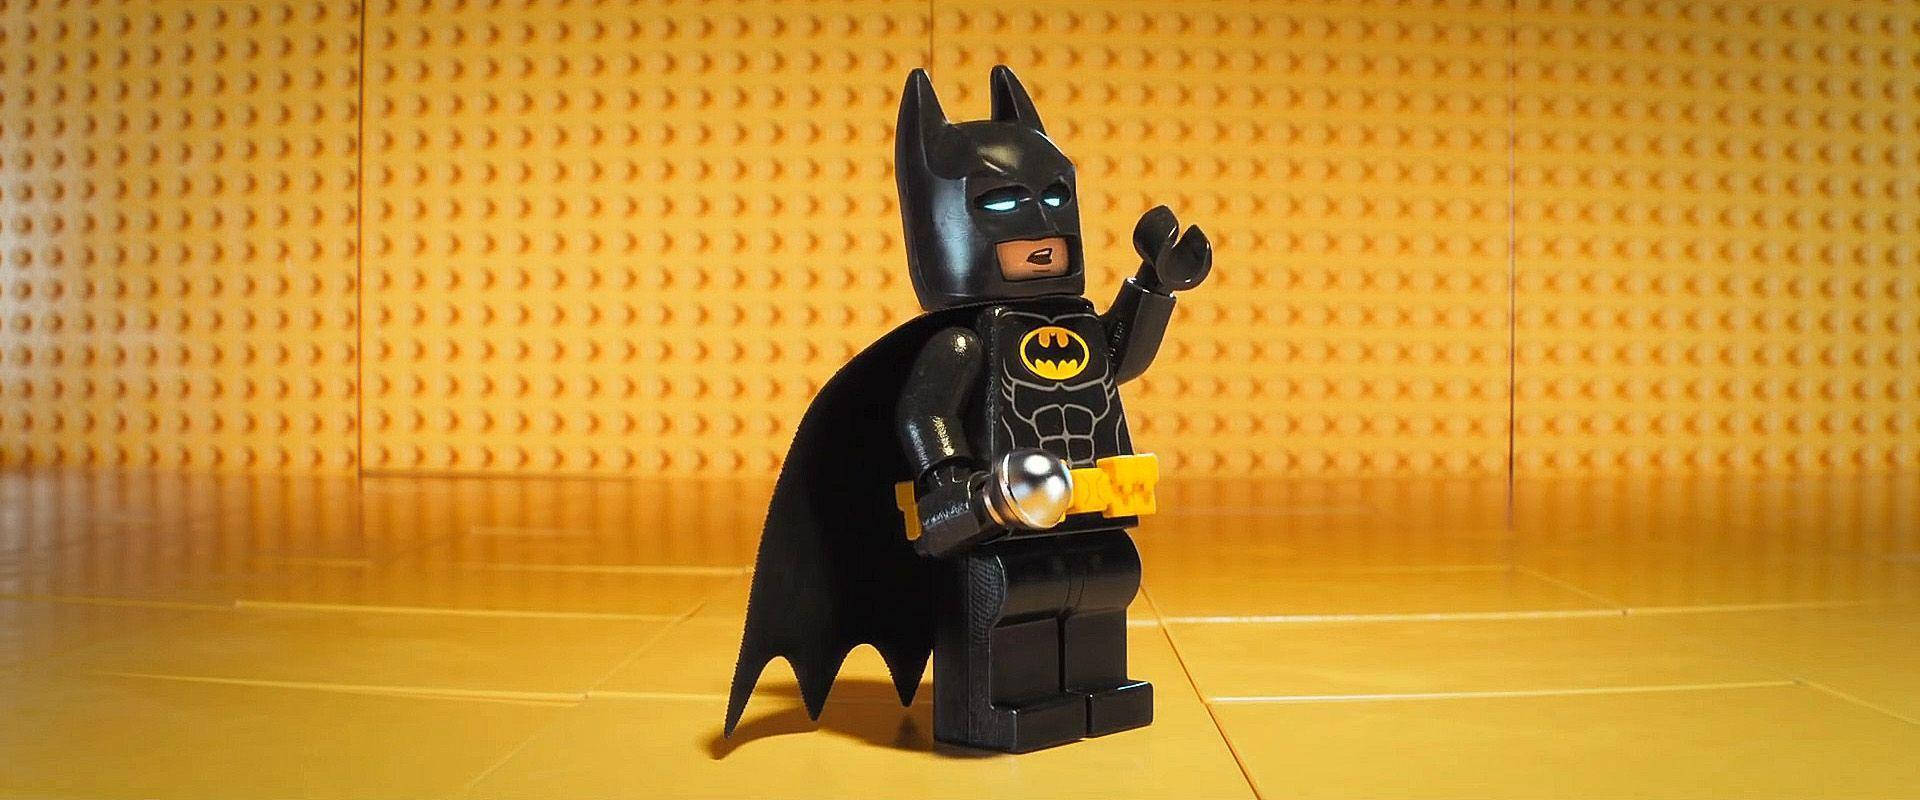 Download Batman From The Lego Batman Movie Side View Wallpaper |  